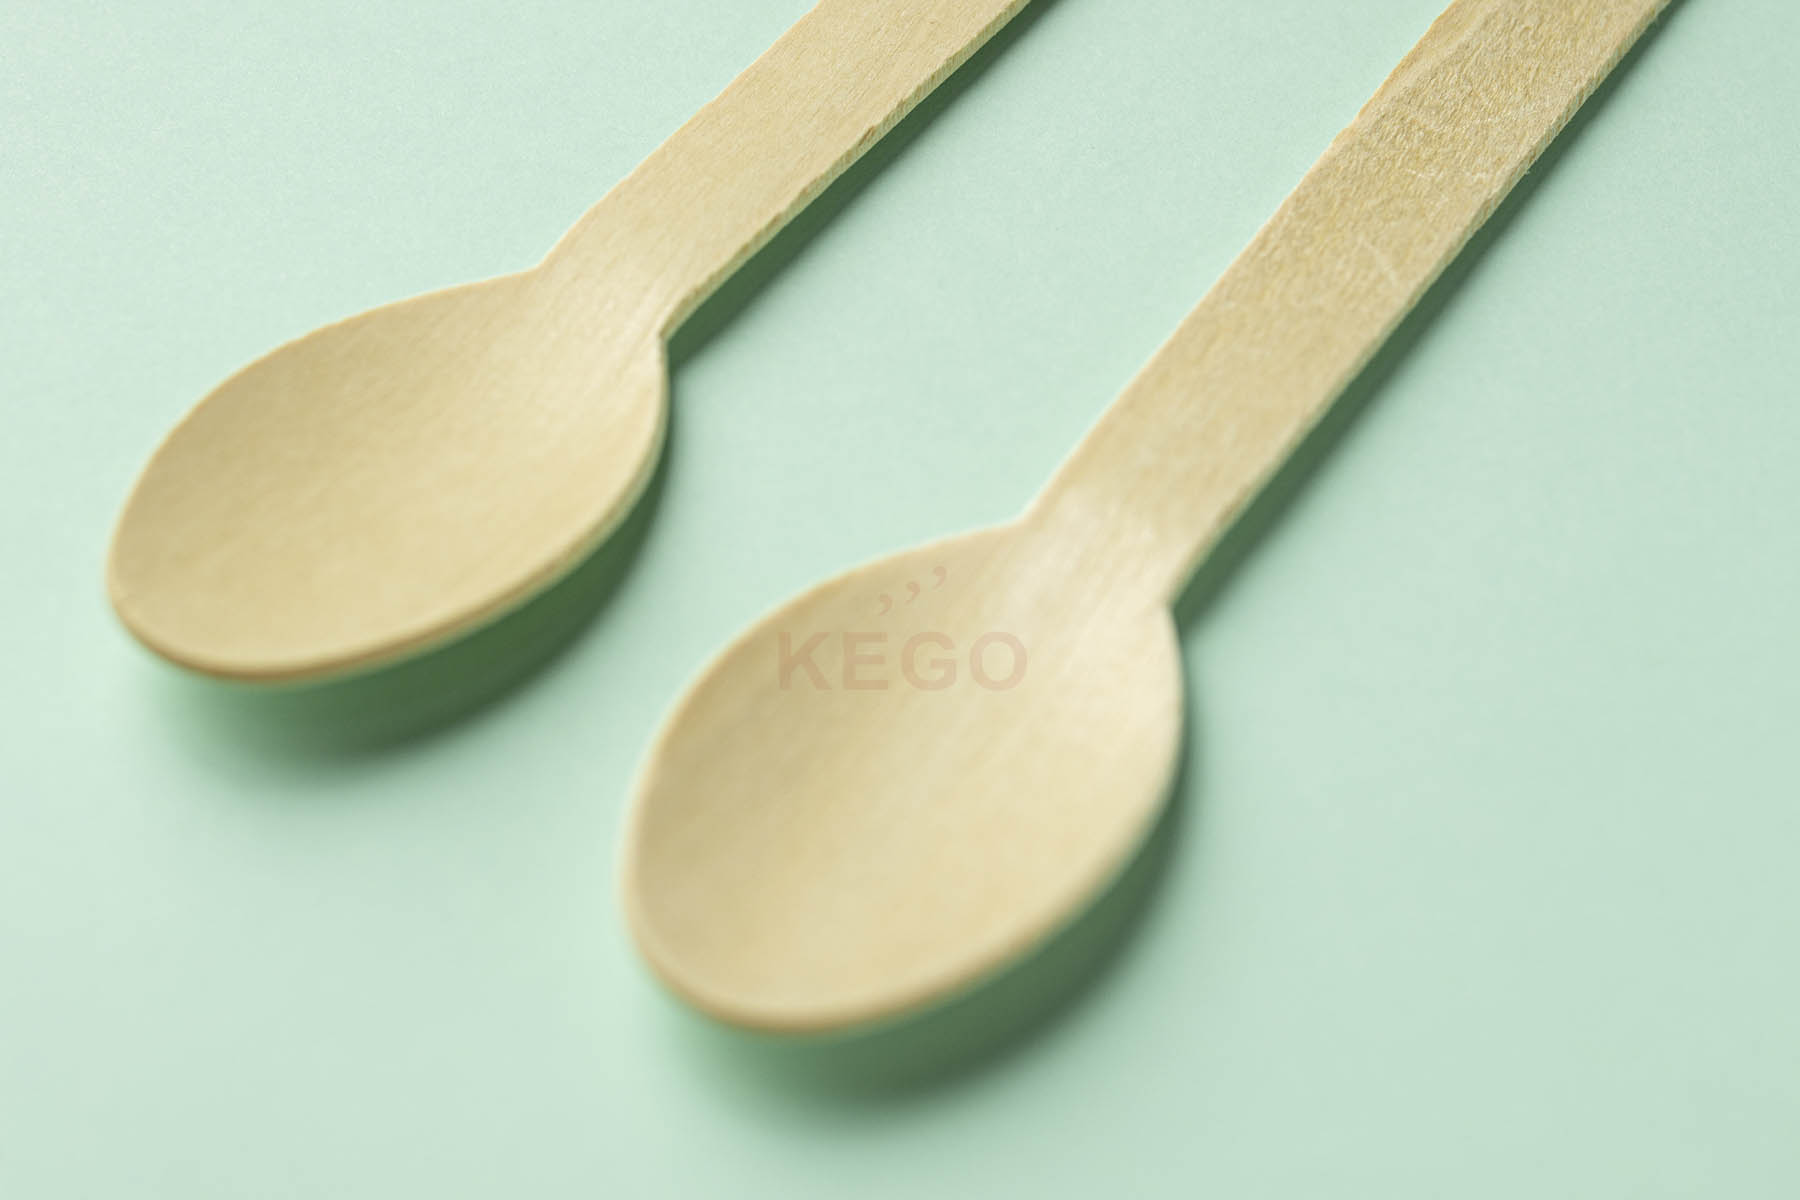 https://kego.com.vn/wp-content/uploads/2015/09/disposable-wooden-spoon-5.jpg